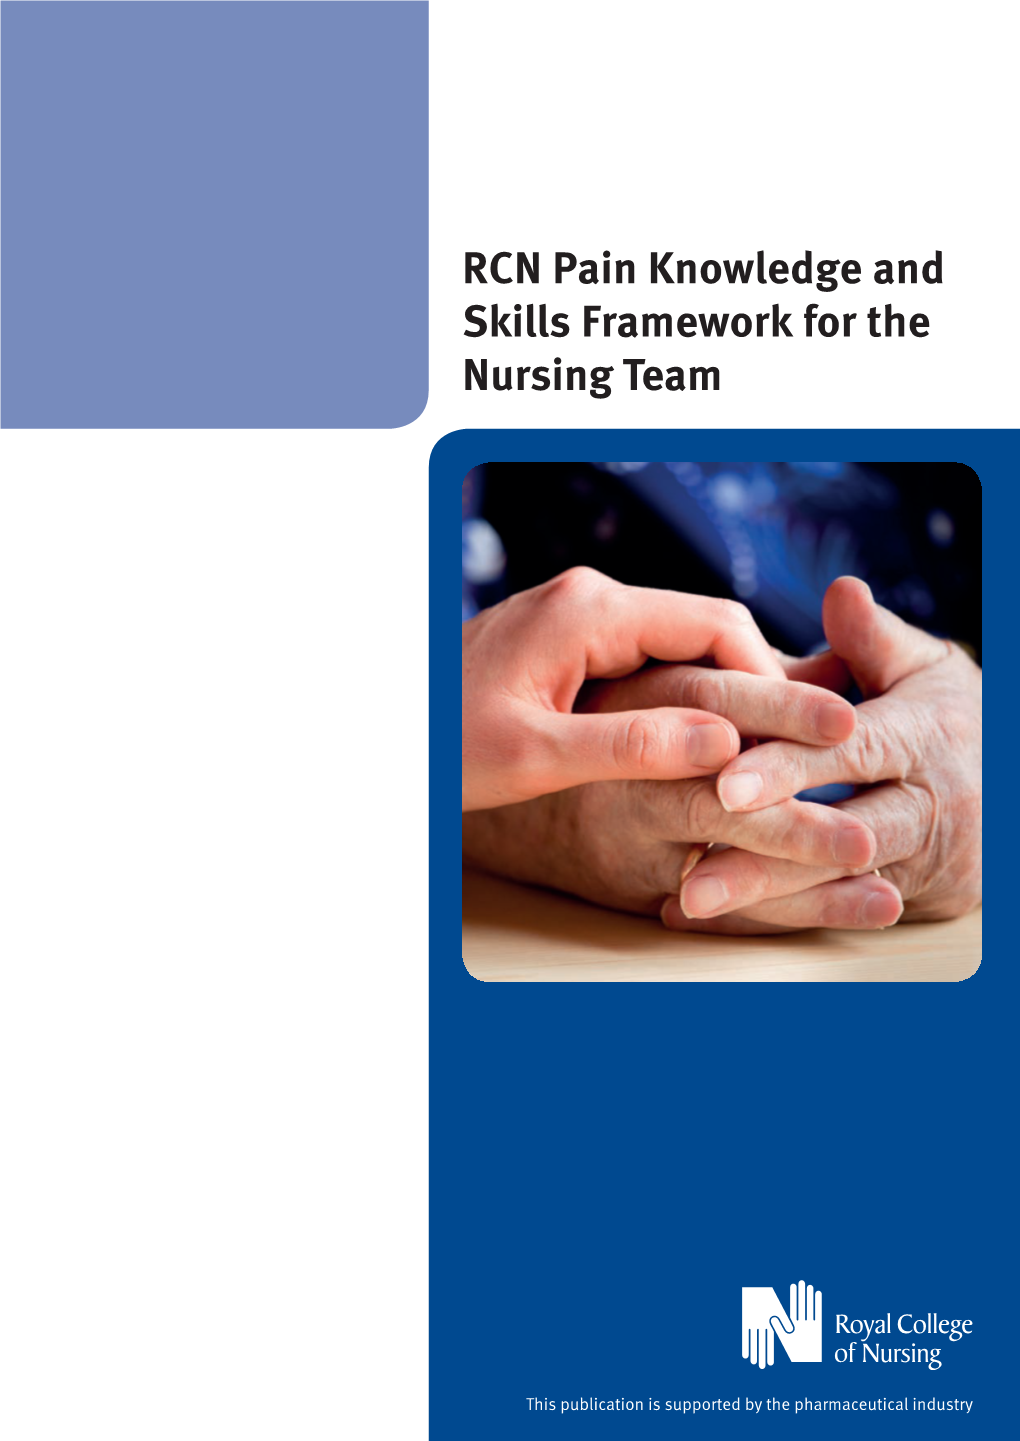 RCN Pain Knowledge and Skills Framework for the Nursing Team